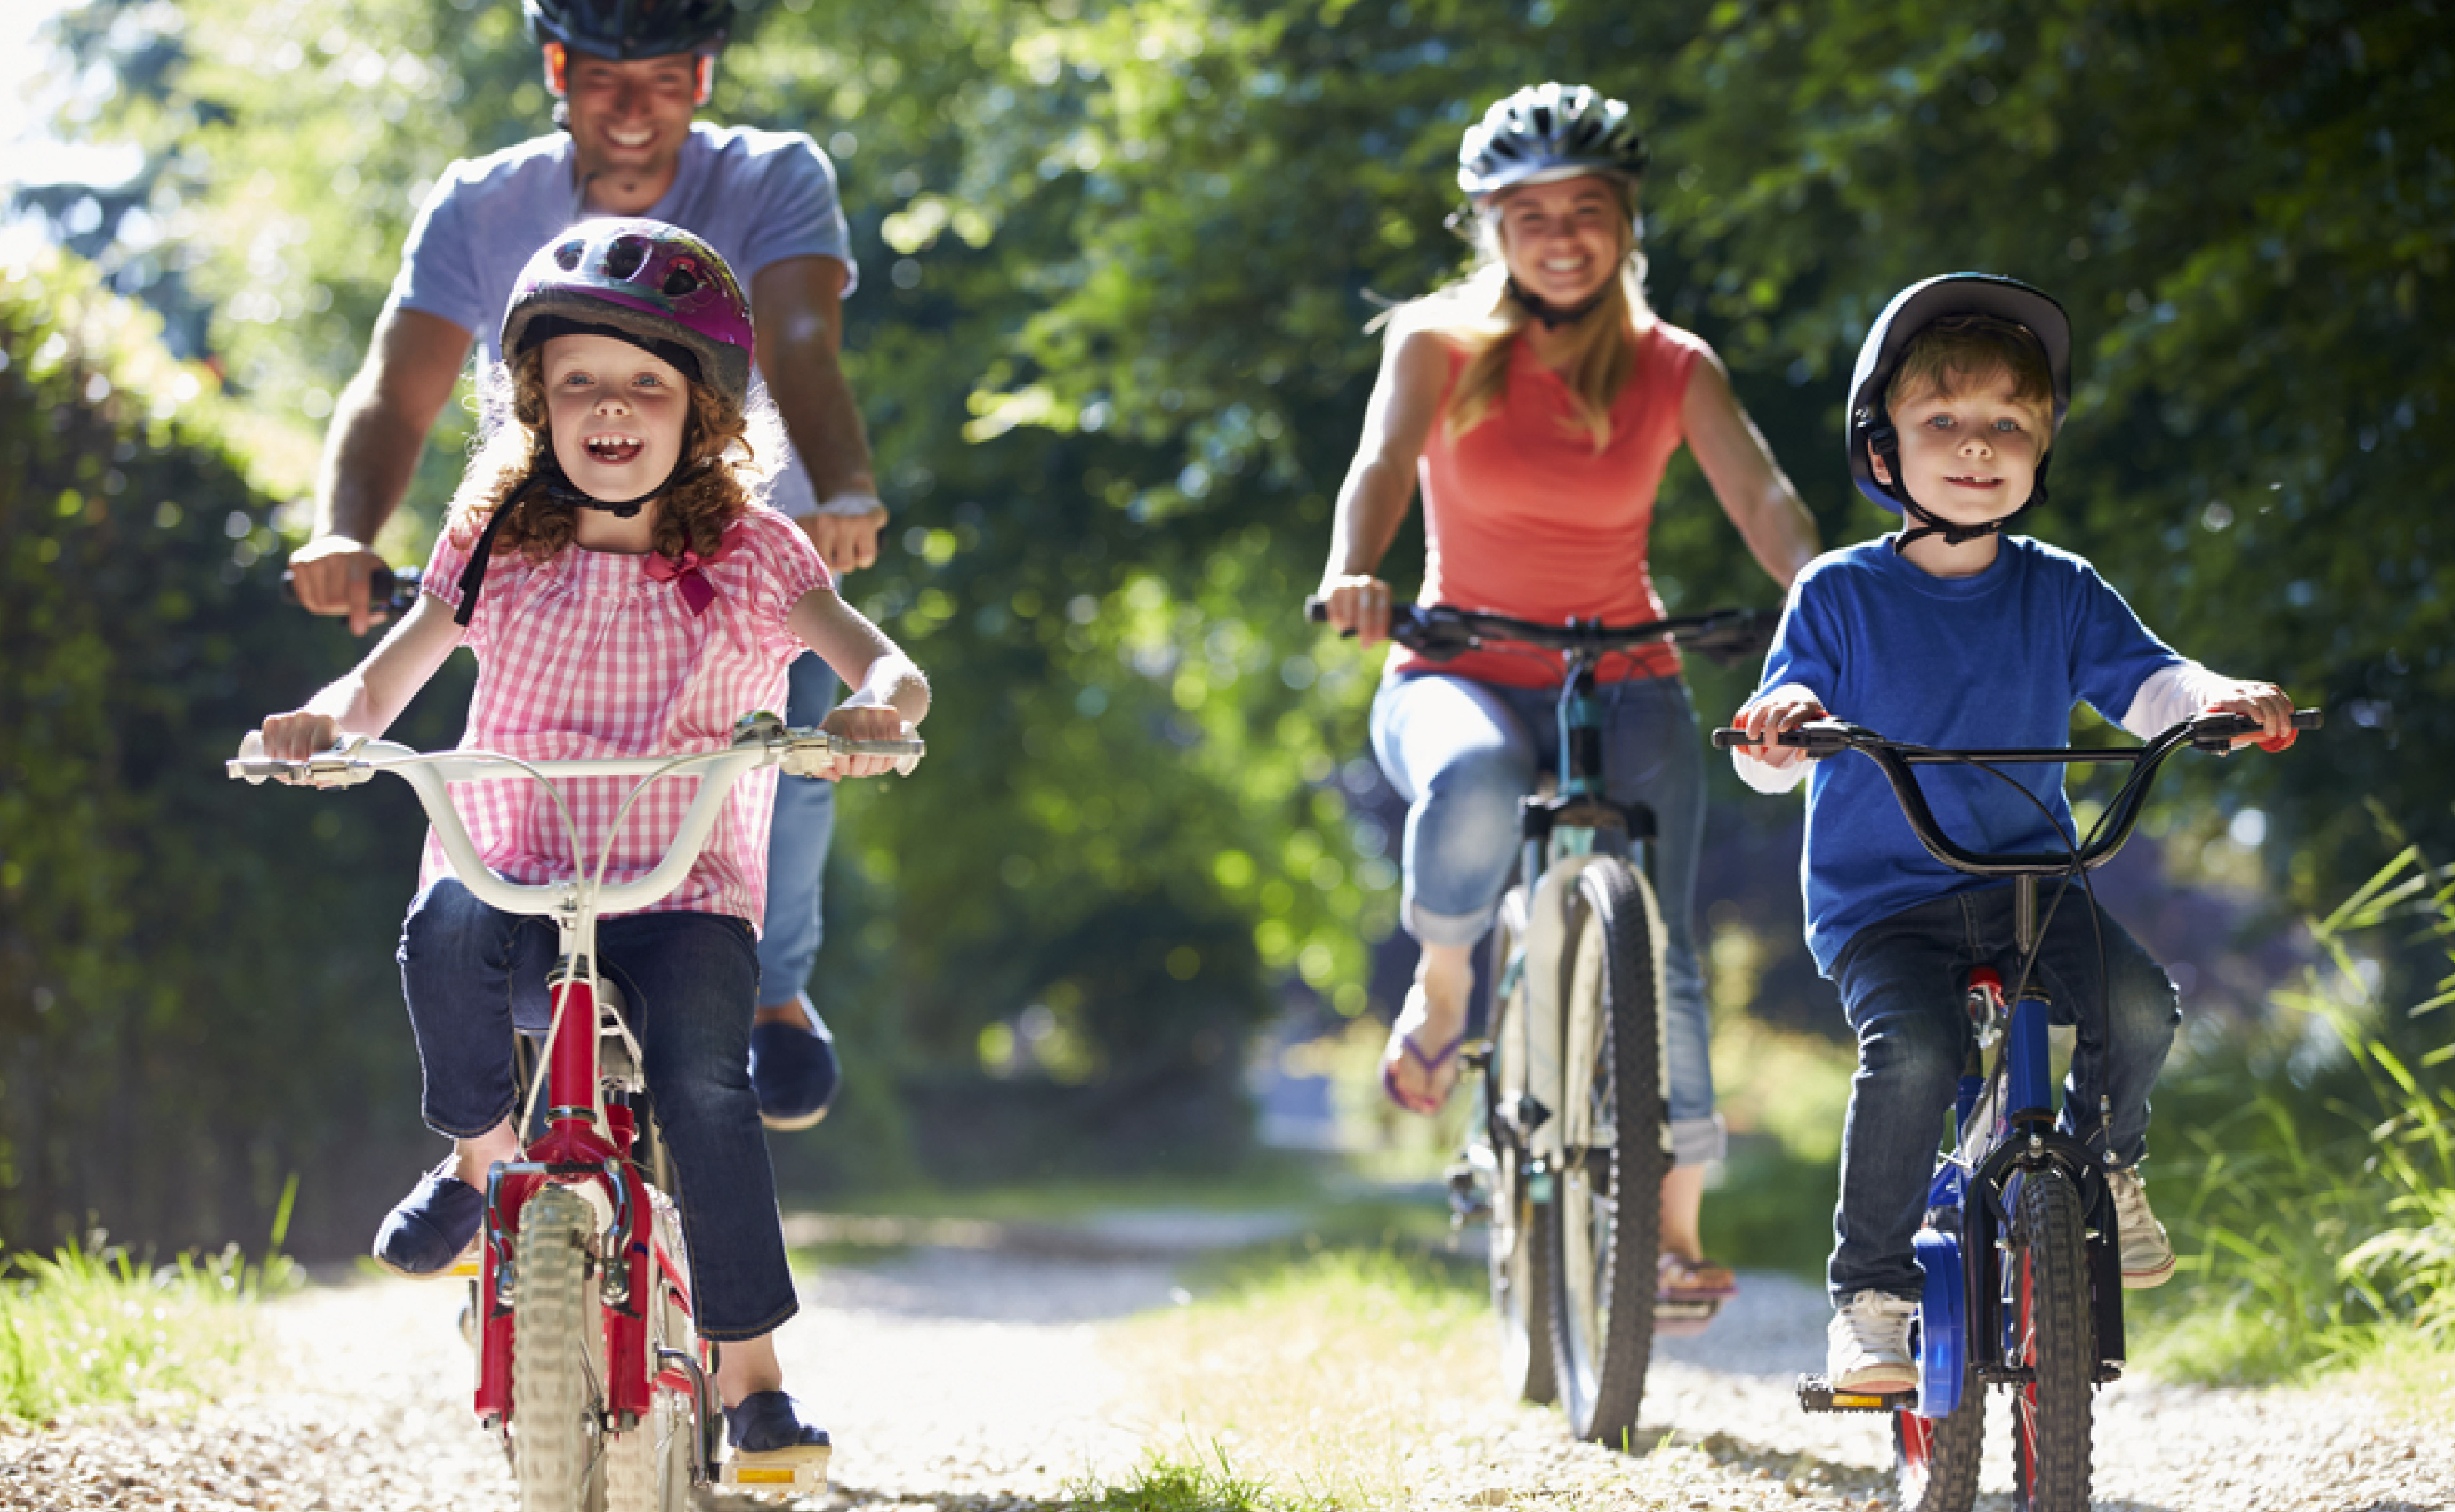 The children are riding bikes. Дети с велосипедом. Дети катаются на велосипеде. Прогулка на велосипеде. Прогулка на велосипеде дети.